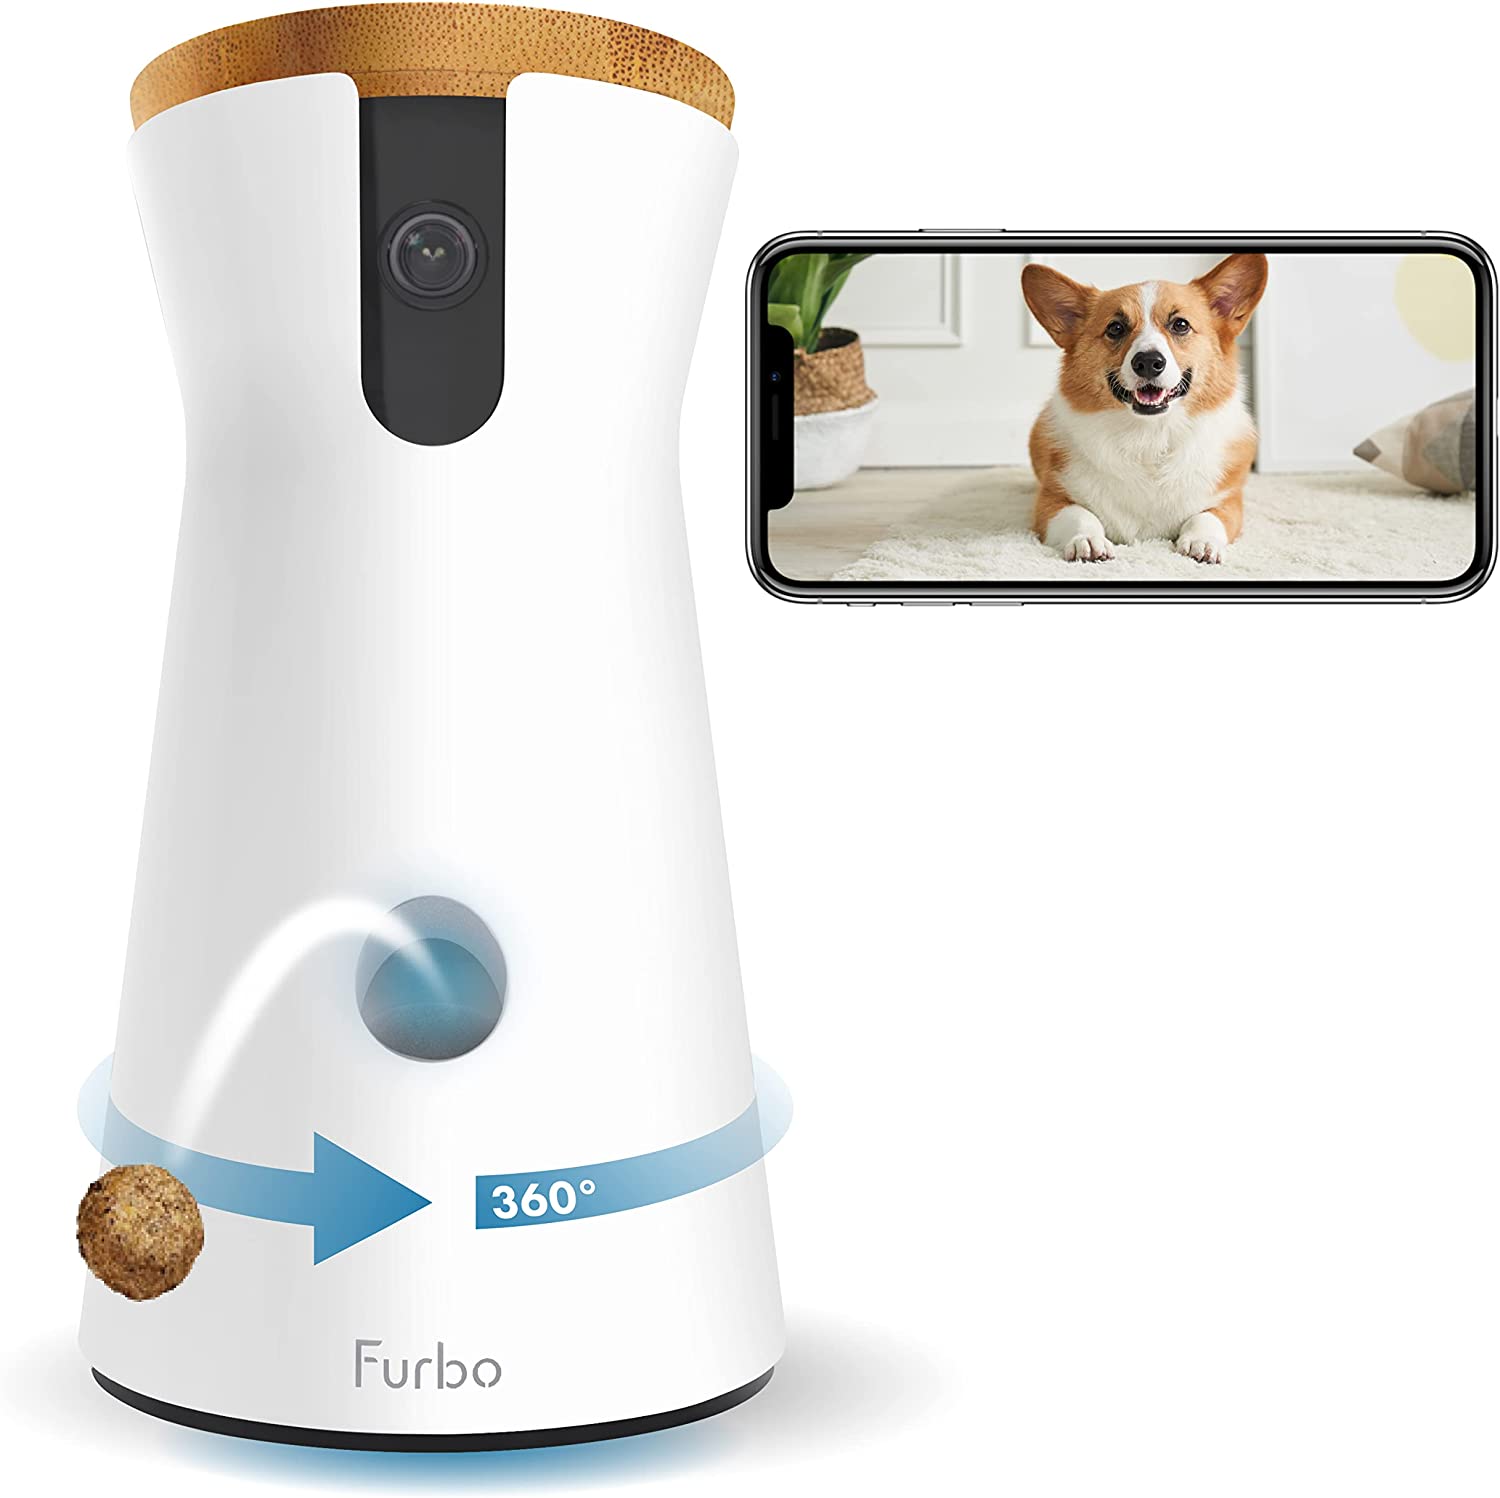 2. Furbo 360° Dog Camera